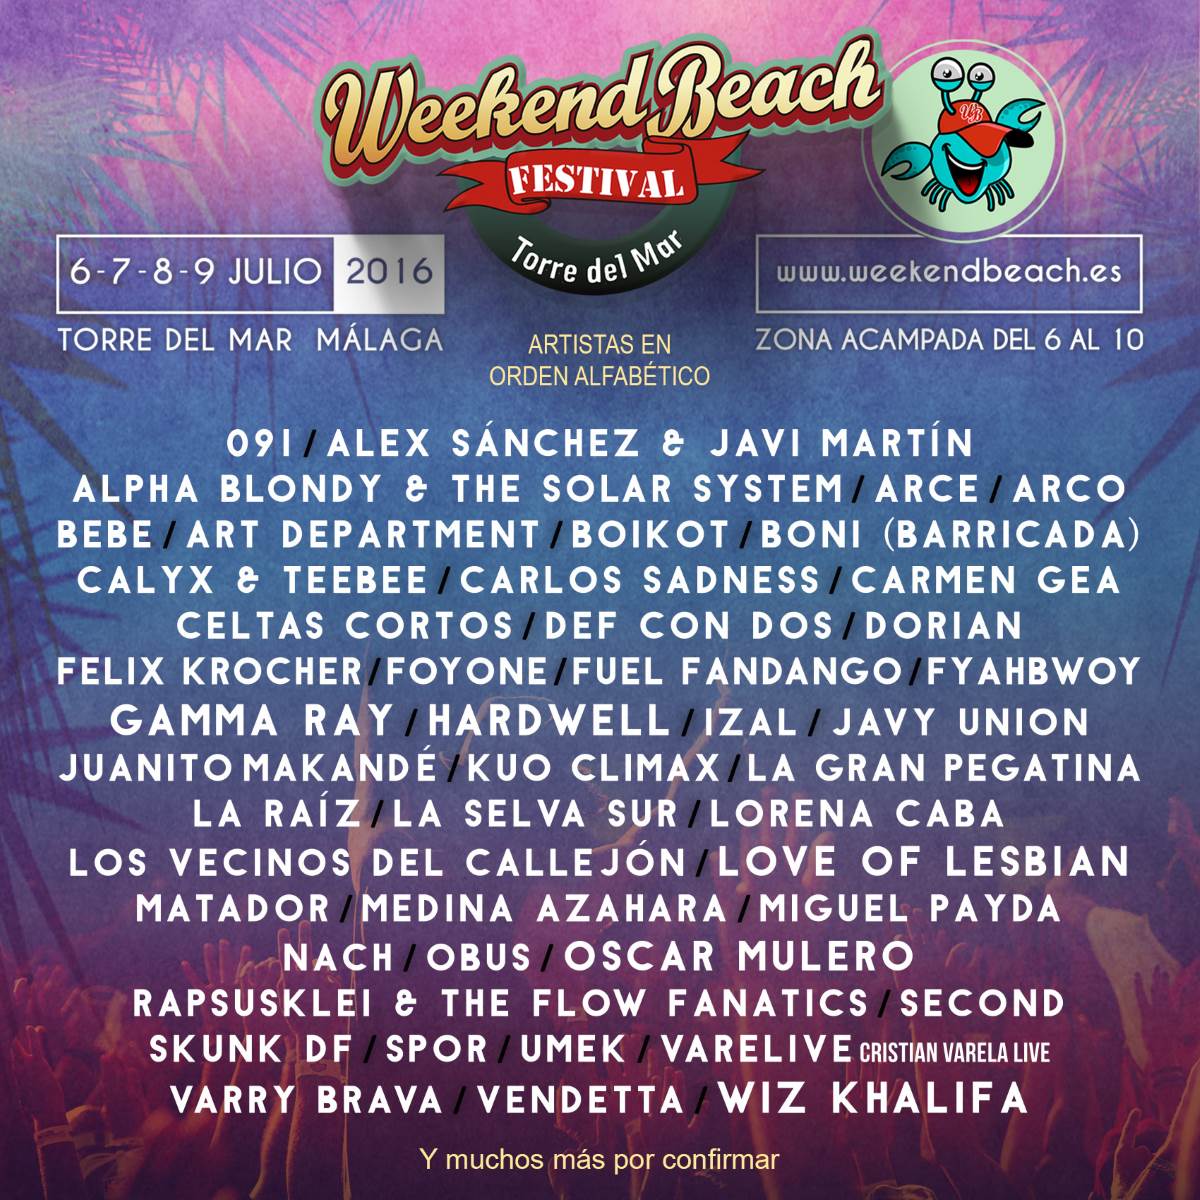 Weekend Beach Festival 2016